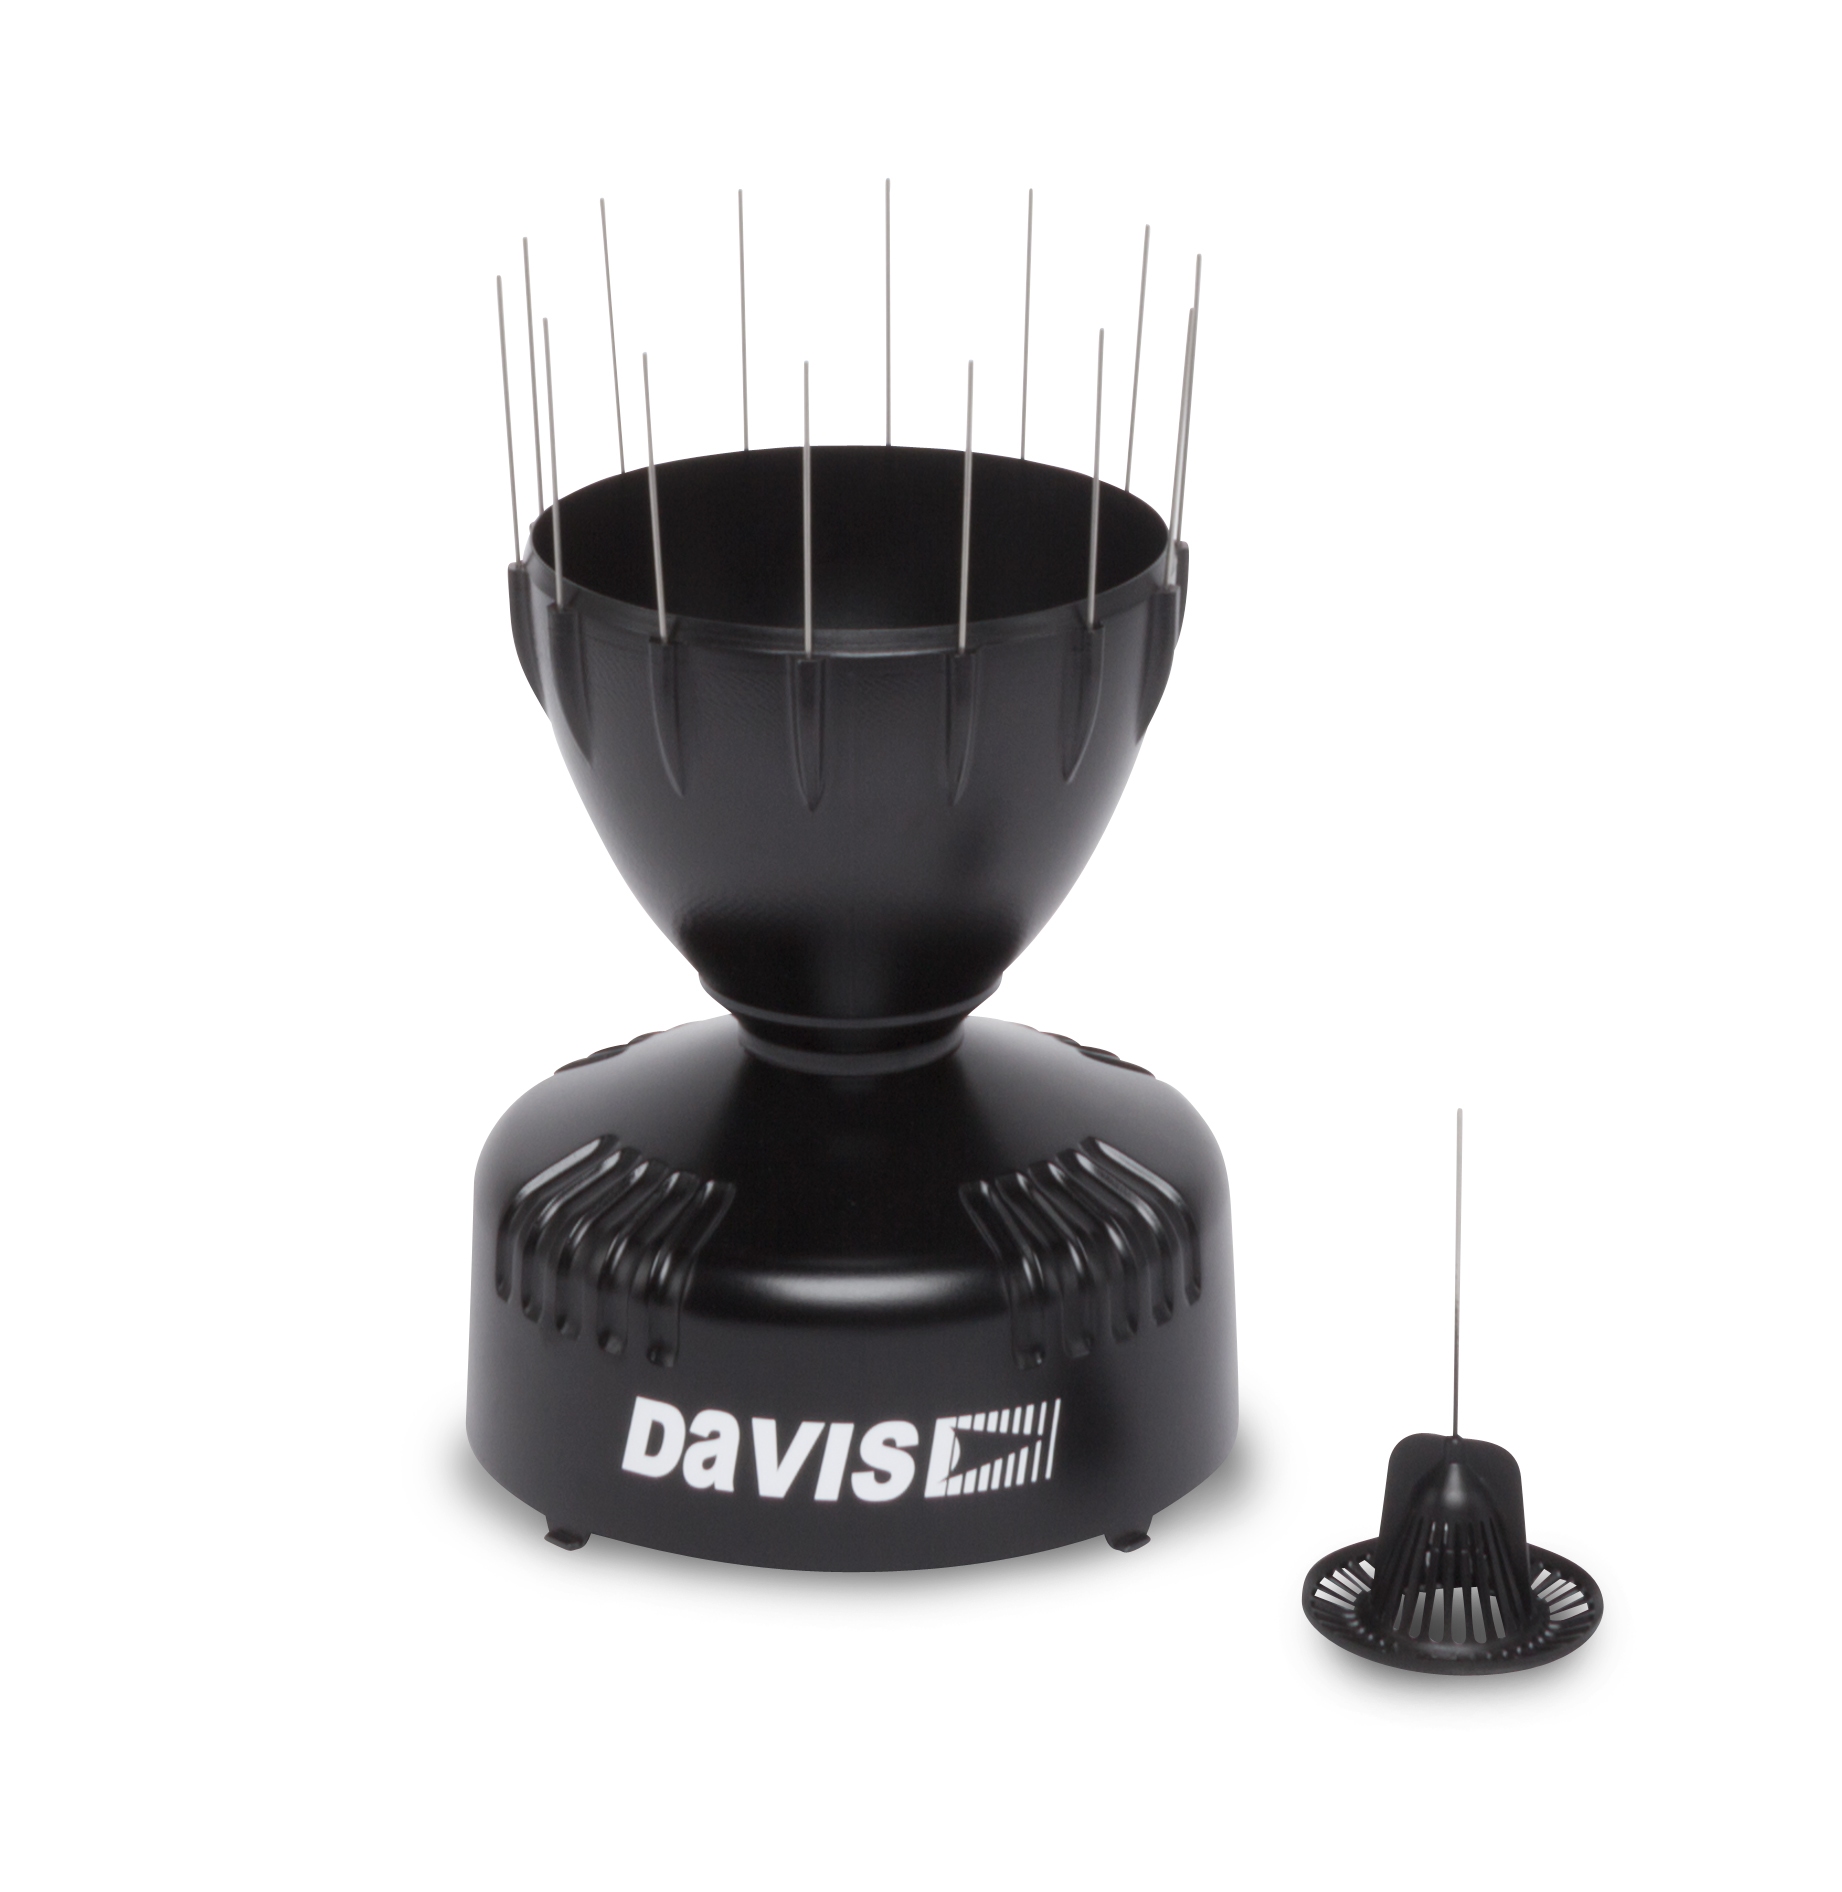 Davis 6263 Vantage Pro2 Plus+fan professional weatherstation